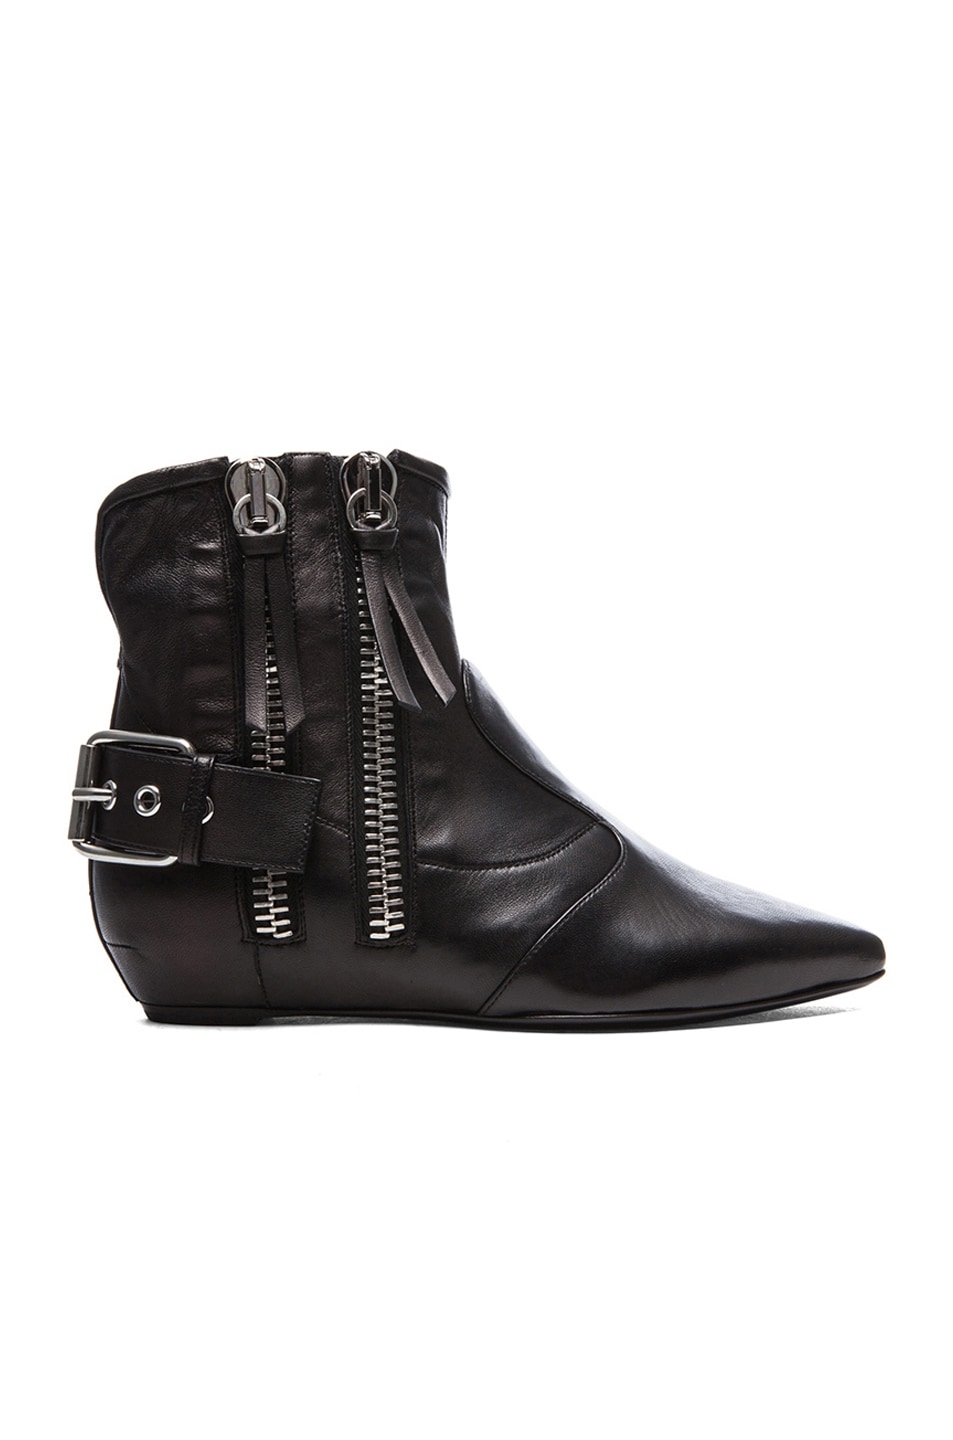 Giuseppe Zanotti Maude Leather Boots in Black | FWRD